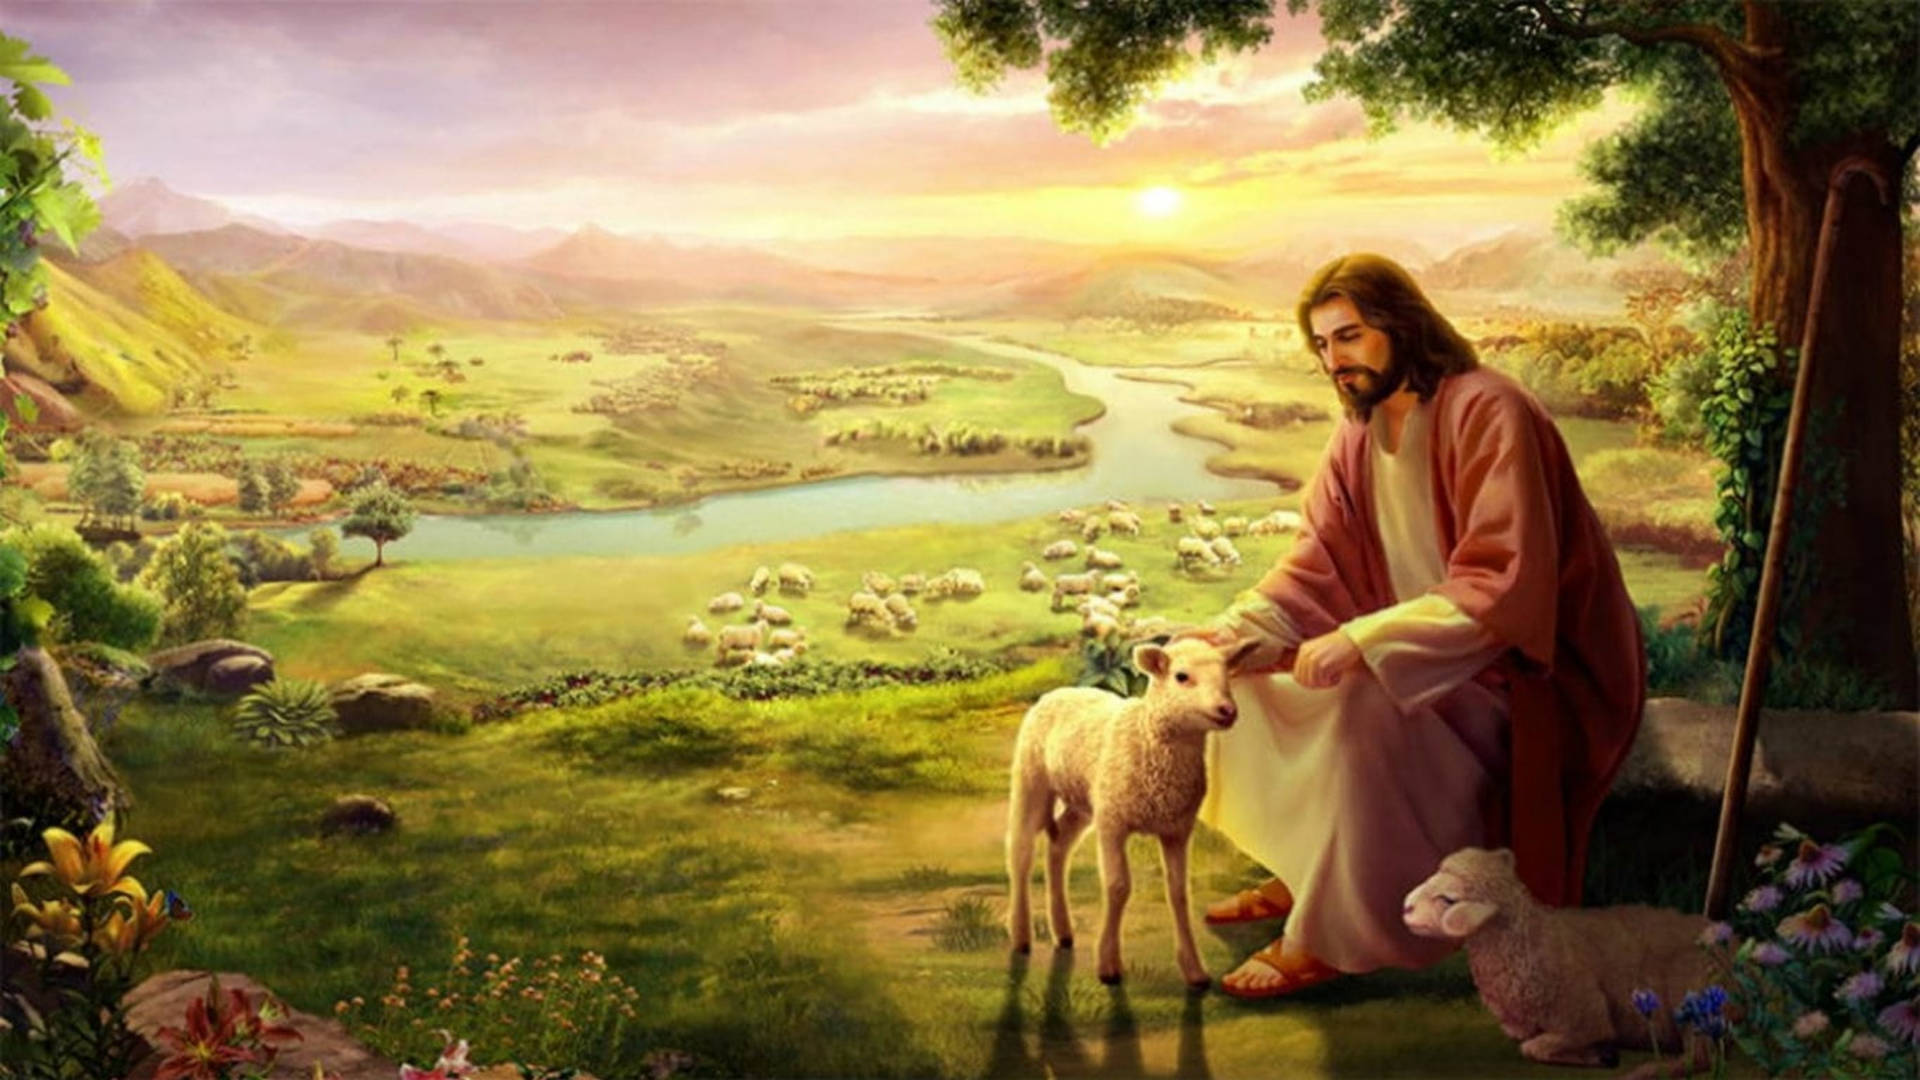 Free Jesus Wallpaper Downloads, [200+] Jesus Wallpapers for FREE |  